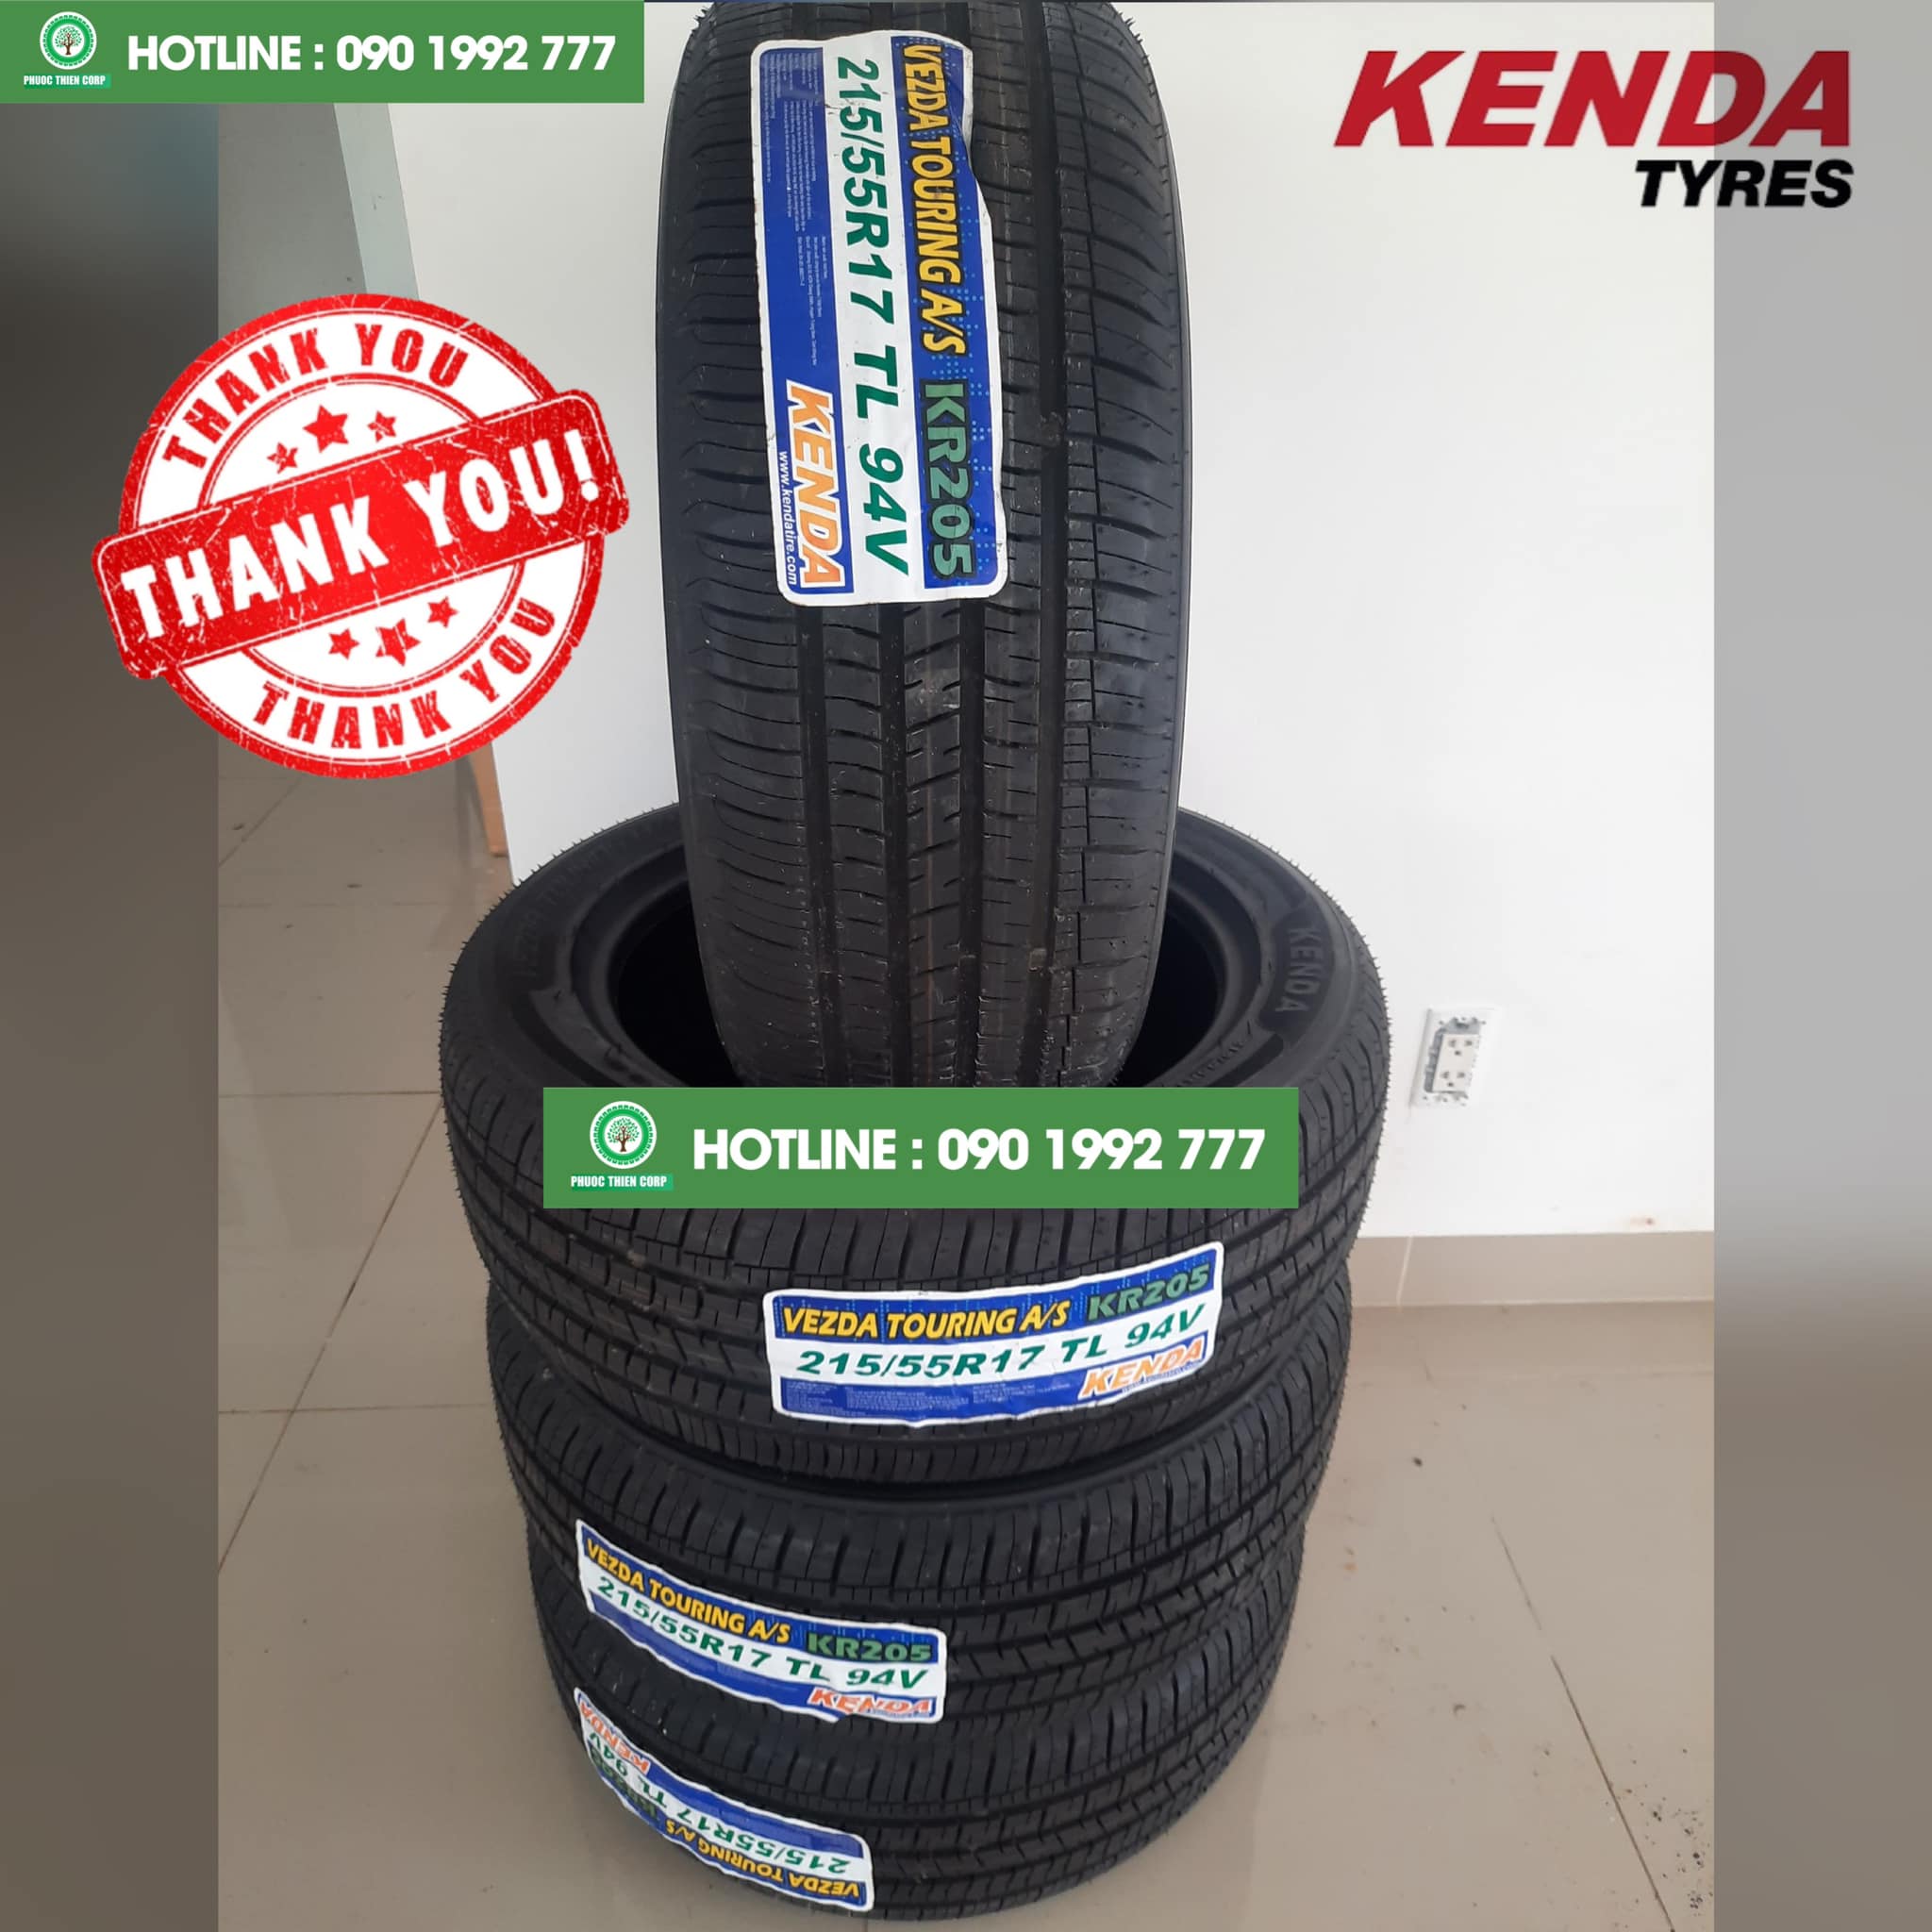 Gợi ý : Thay lốp 215/55R17 KENDA cho xe Honda HRV